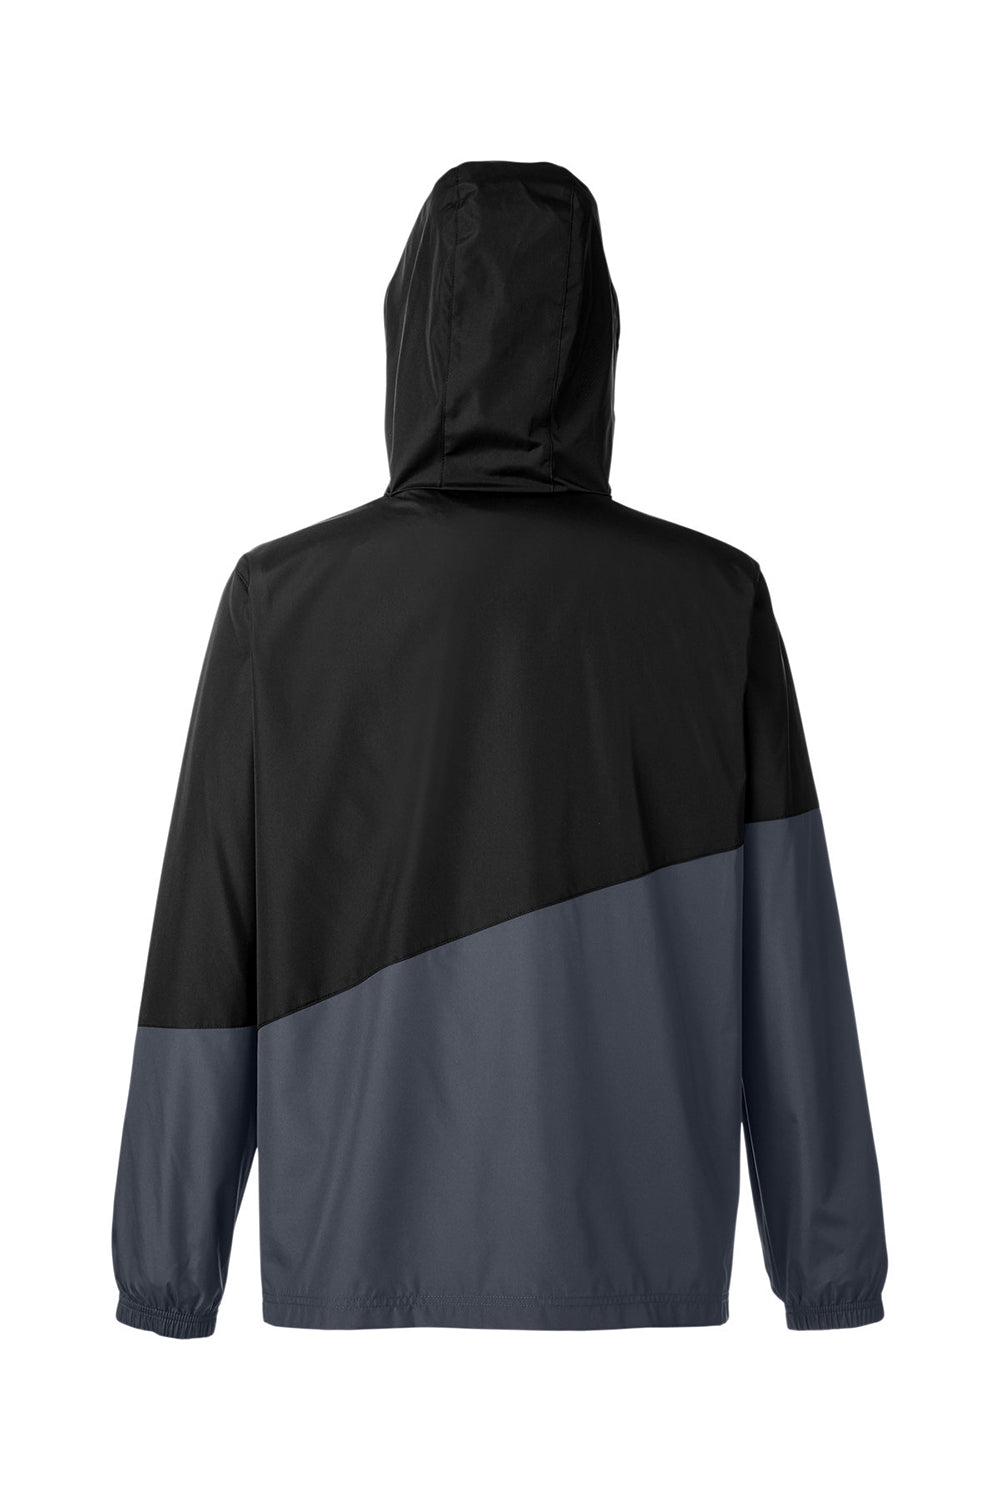 Core 365 CE710 Mens Techno Lite Colorblock Full Zip Windbreaker Jacket Black/Carbon Grey Flat Back